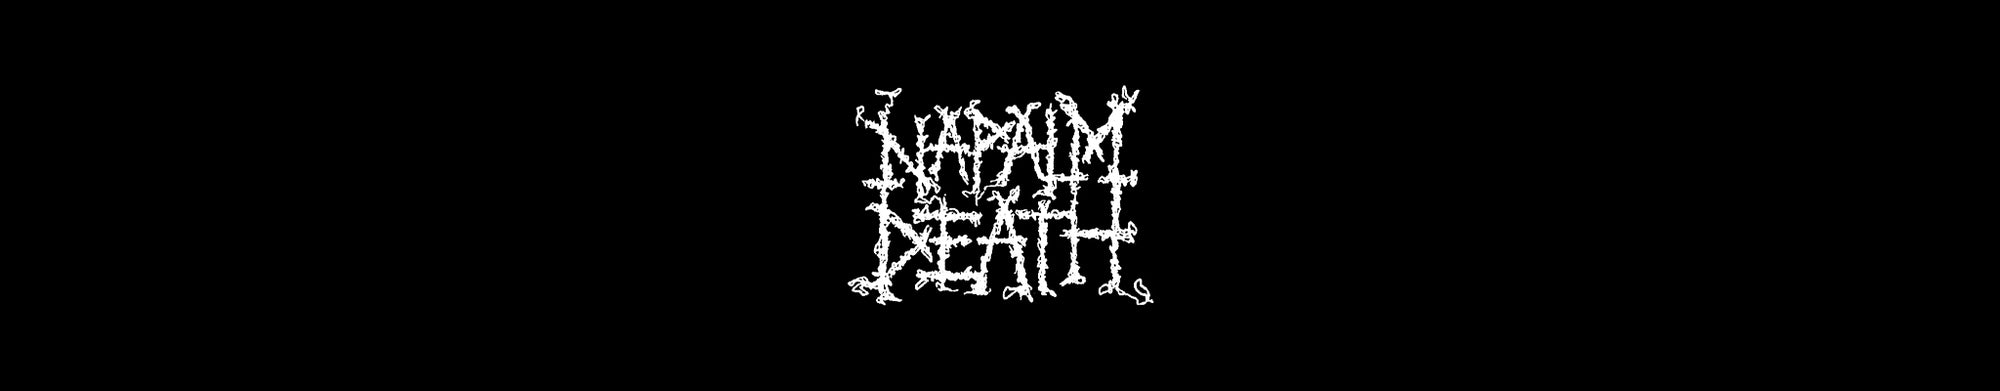 NAPALM DEATH